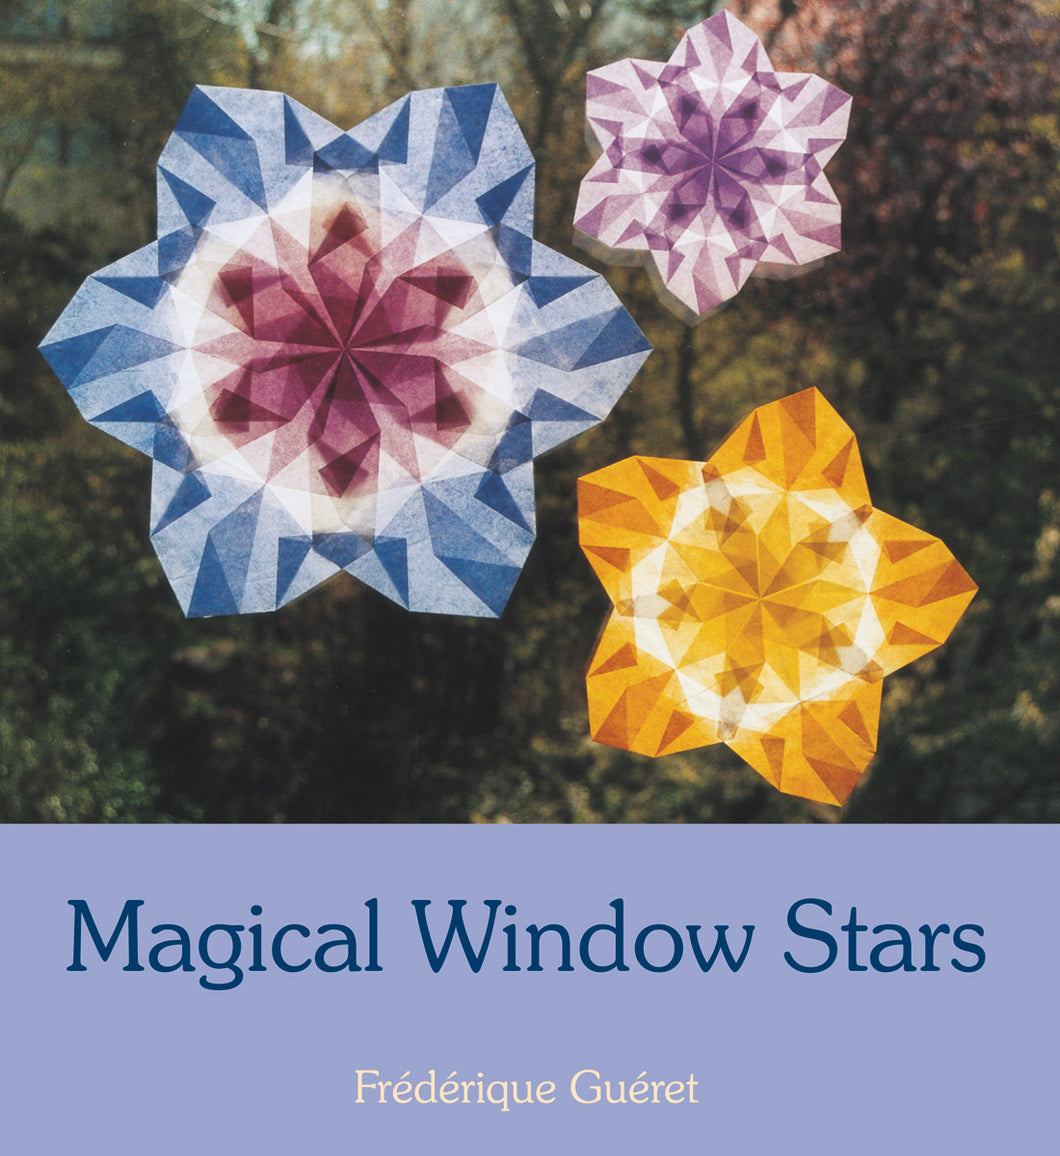 Magical Window Stars by Frédérique Guéret